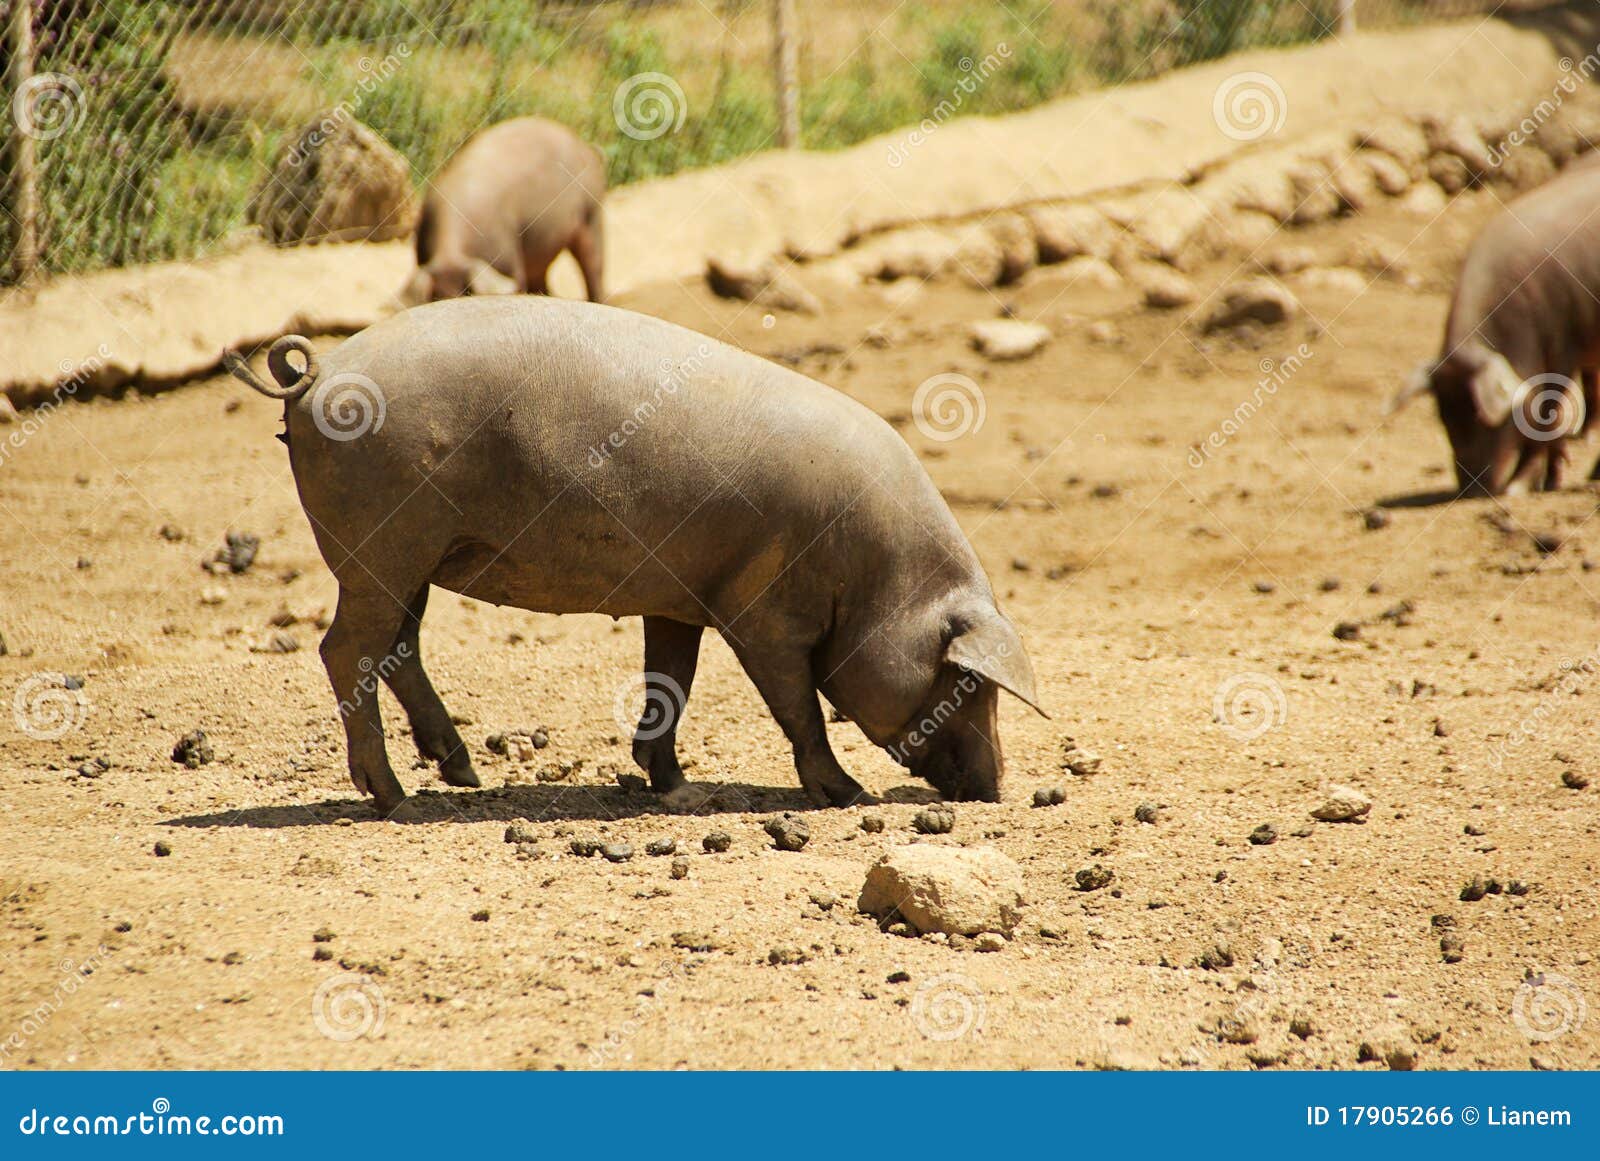 black iberian pig